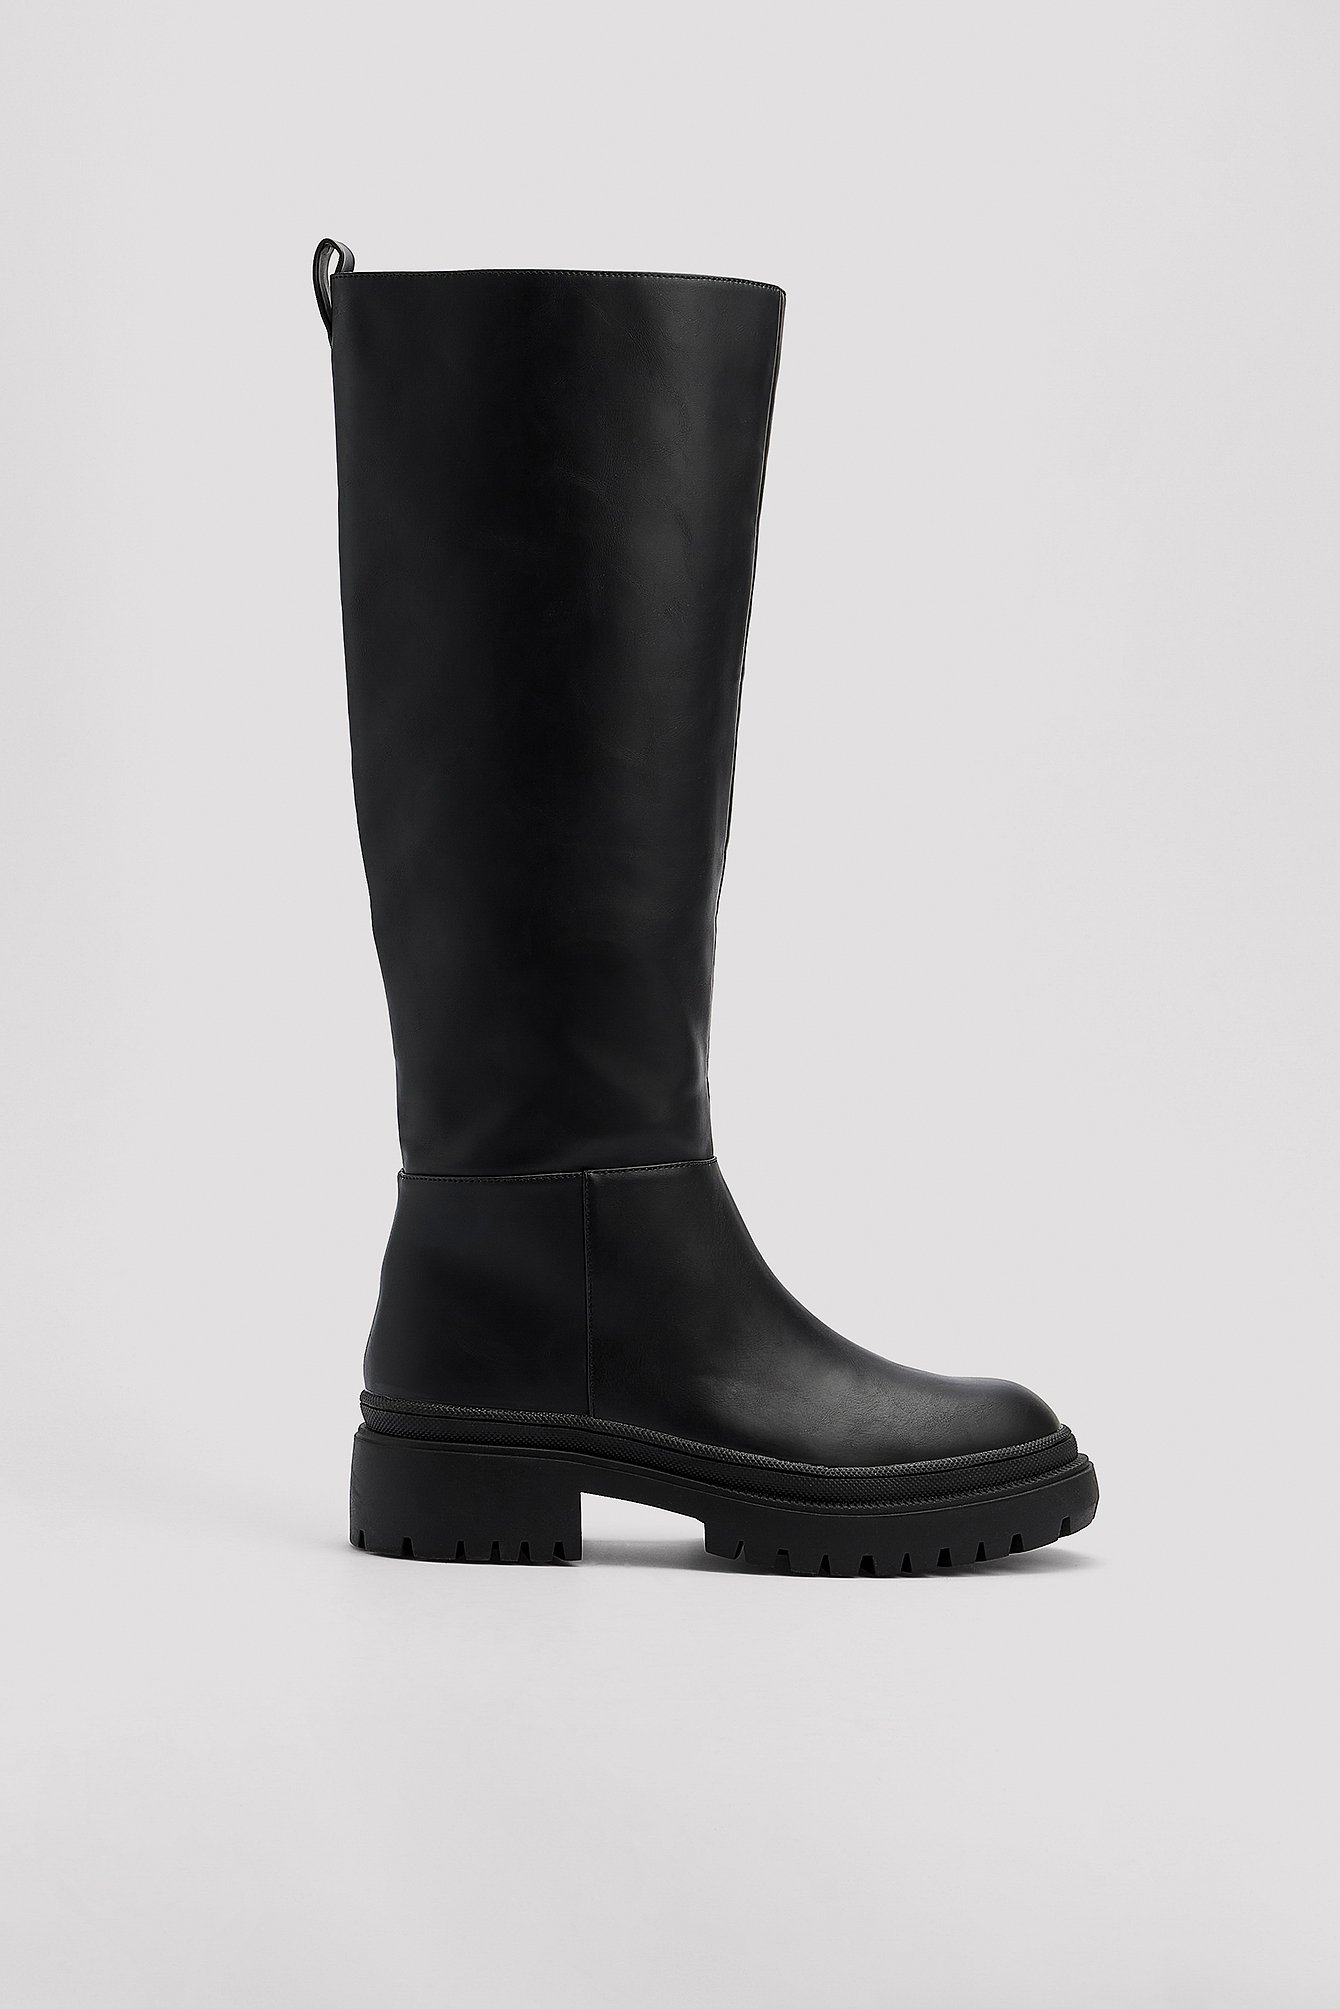 Ida Carlsson X Na-Kd Under Knee Shaft Boots - Black